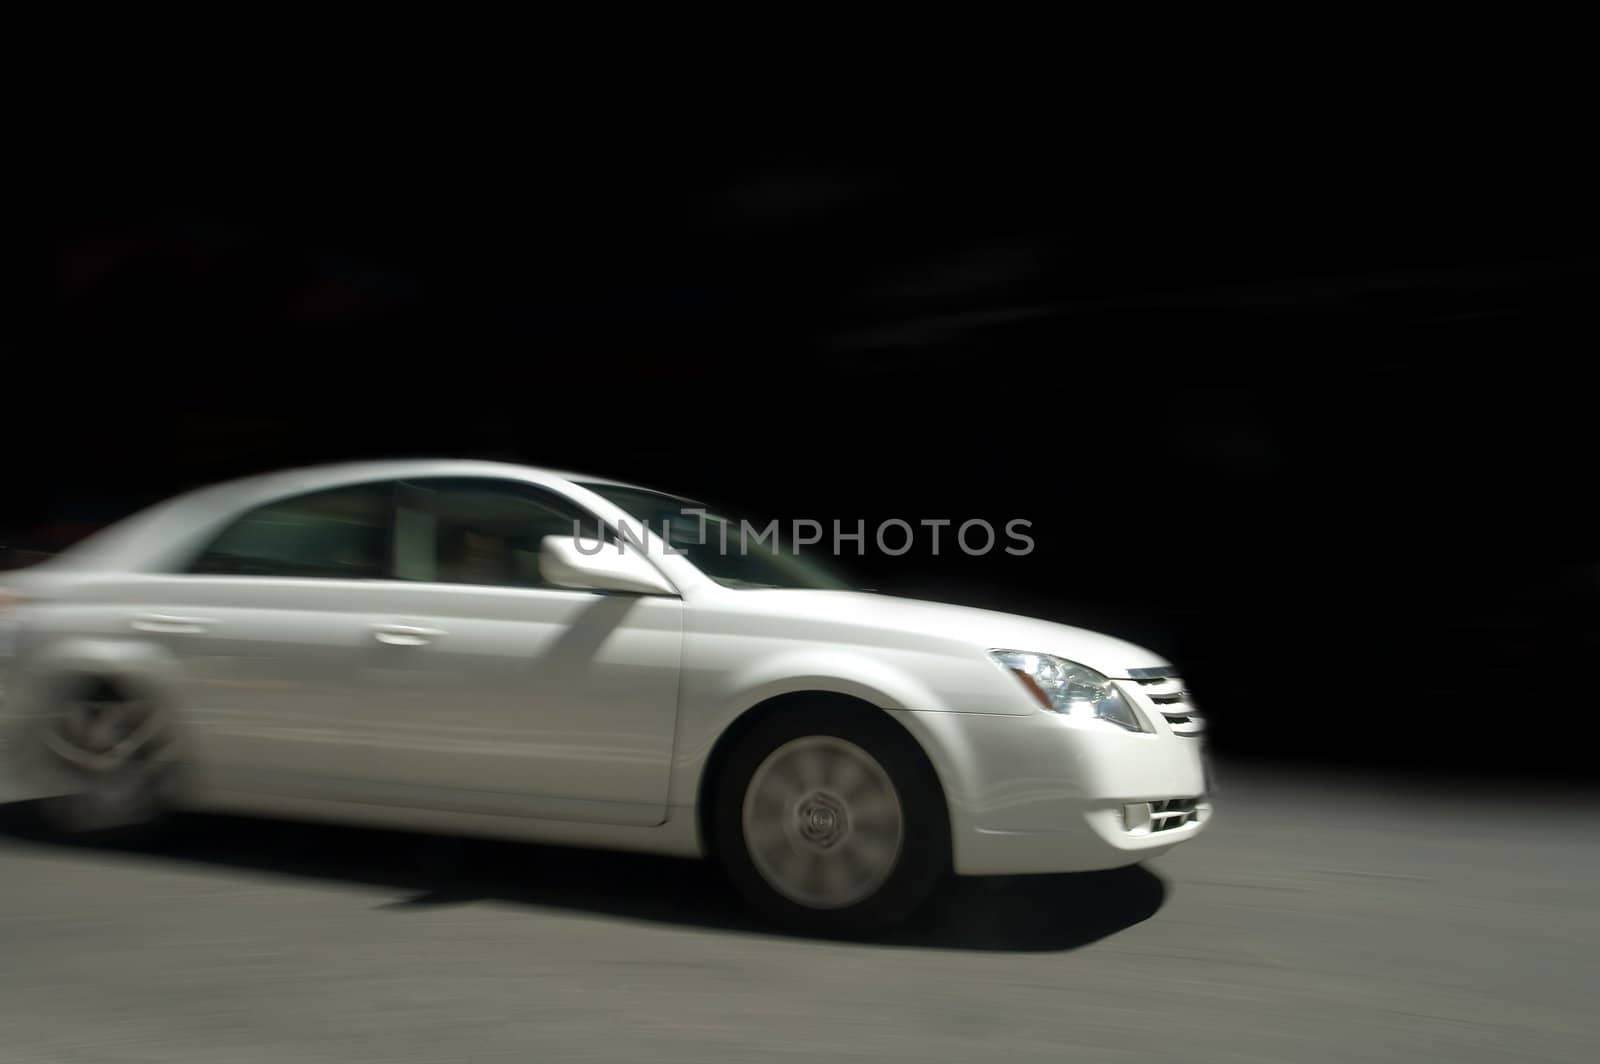 white car in speed, motion blur, black background